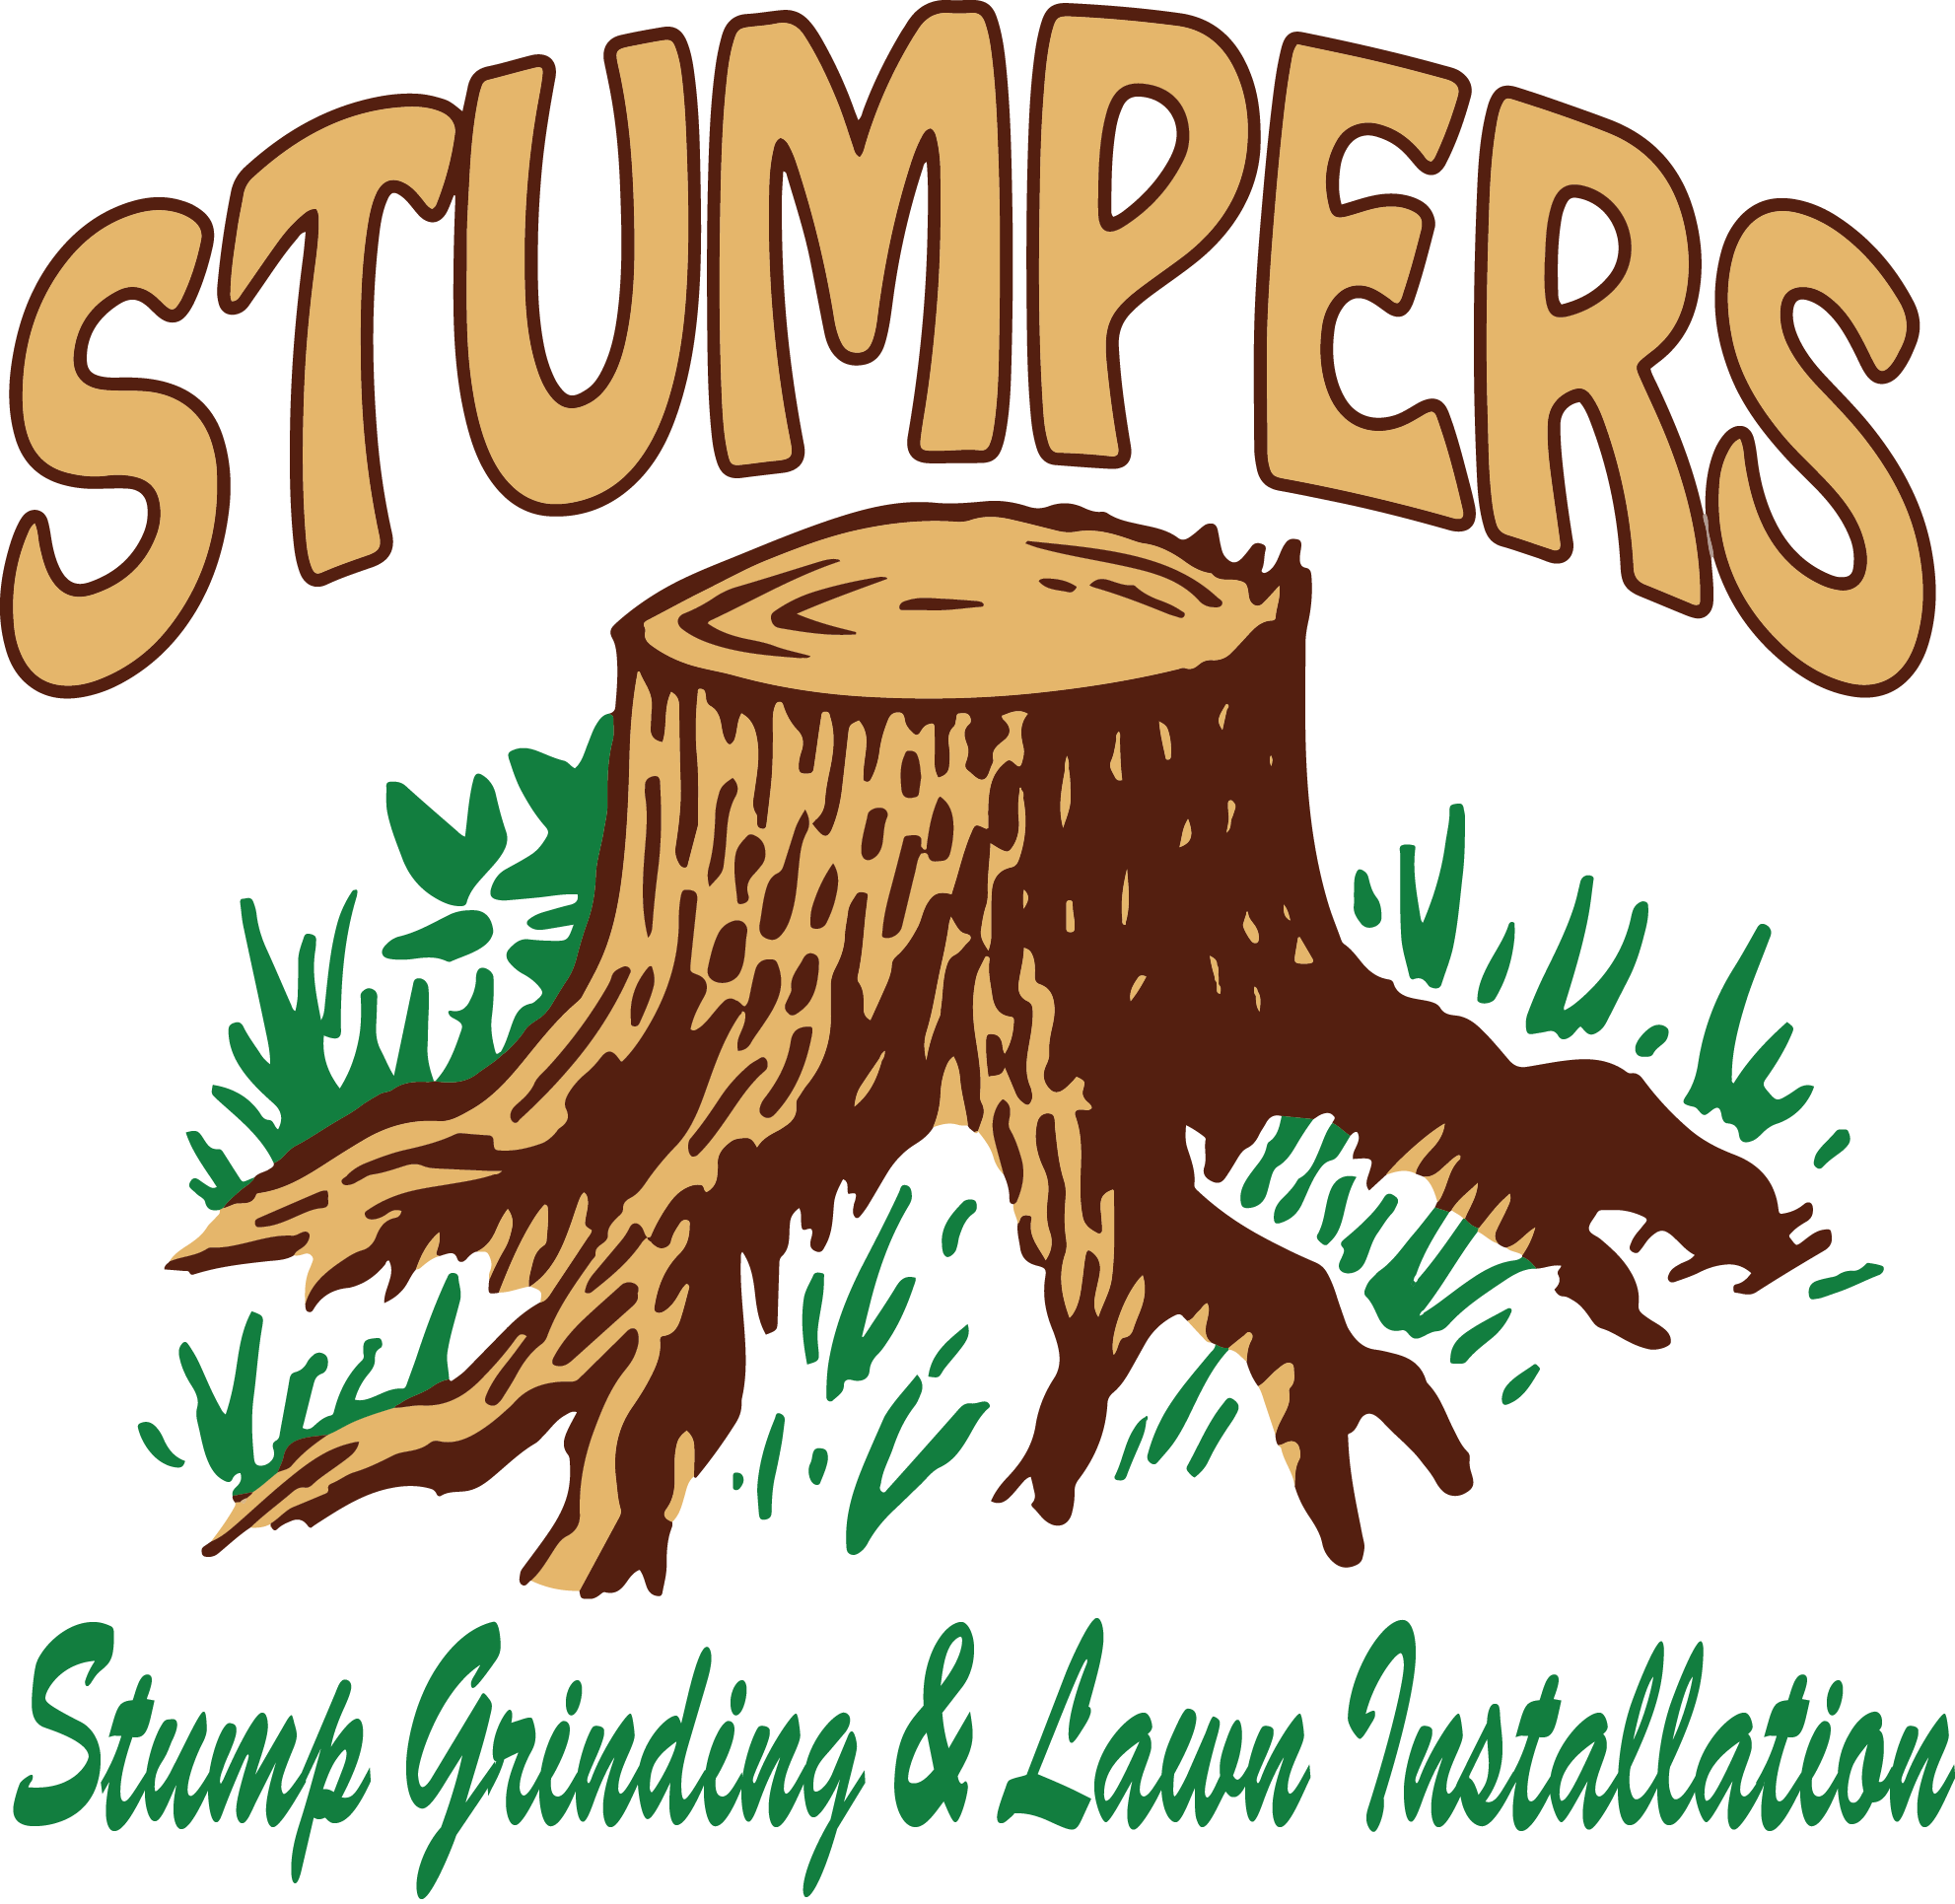 Stumpers, LLC Logo